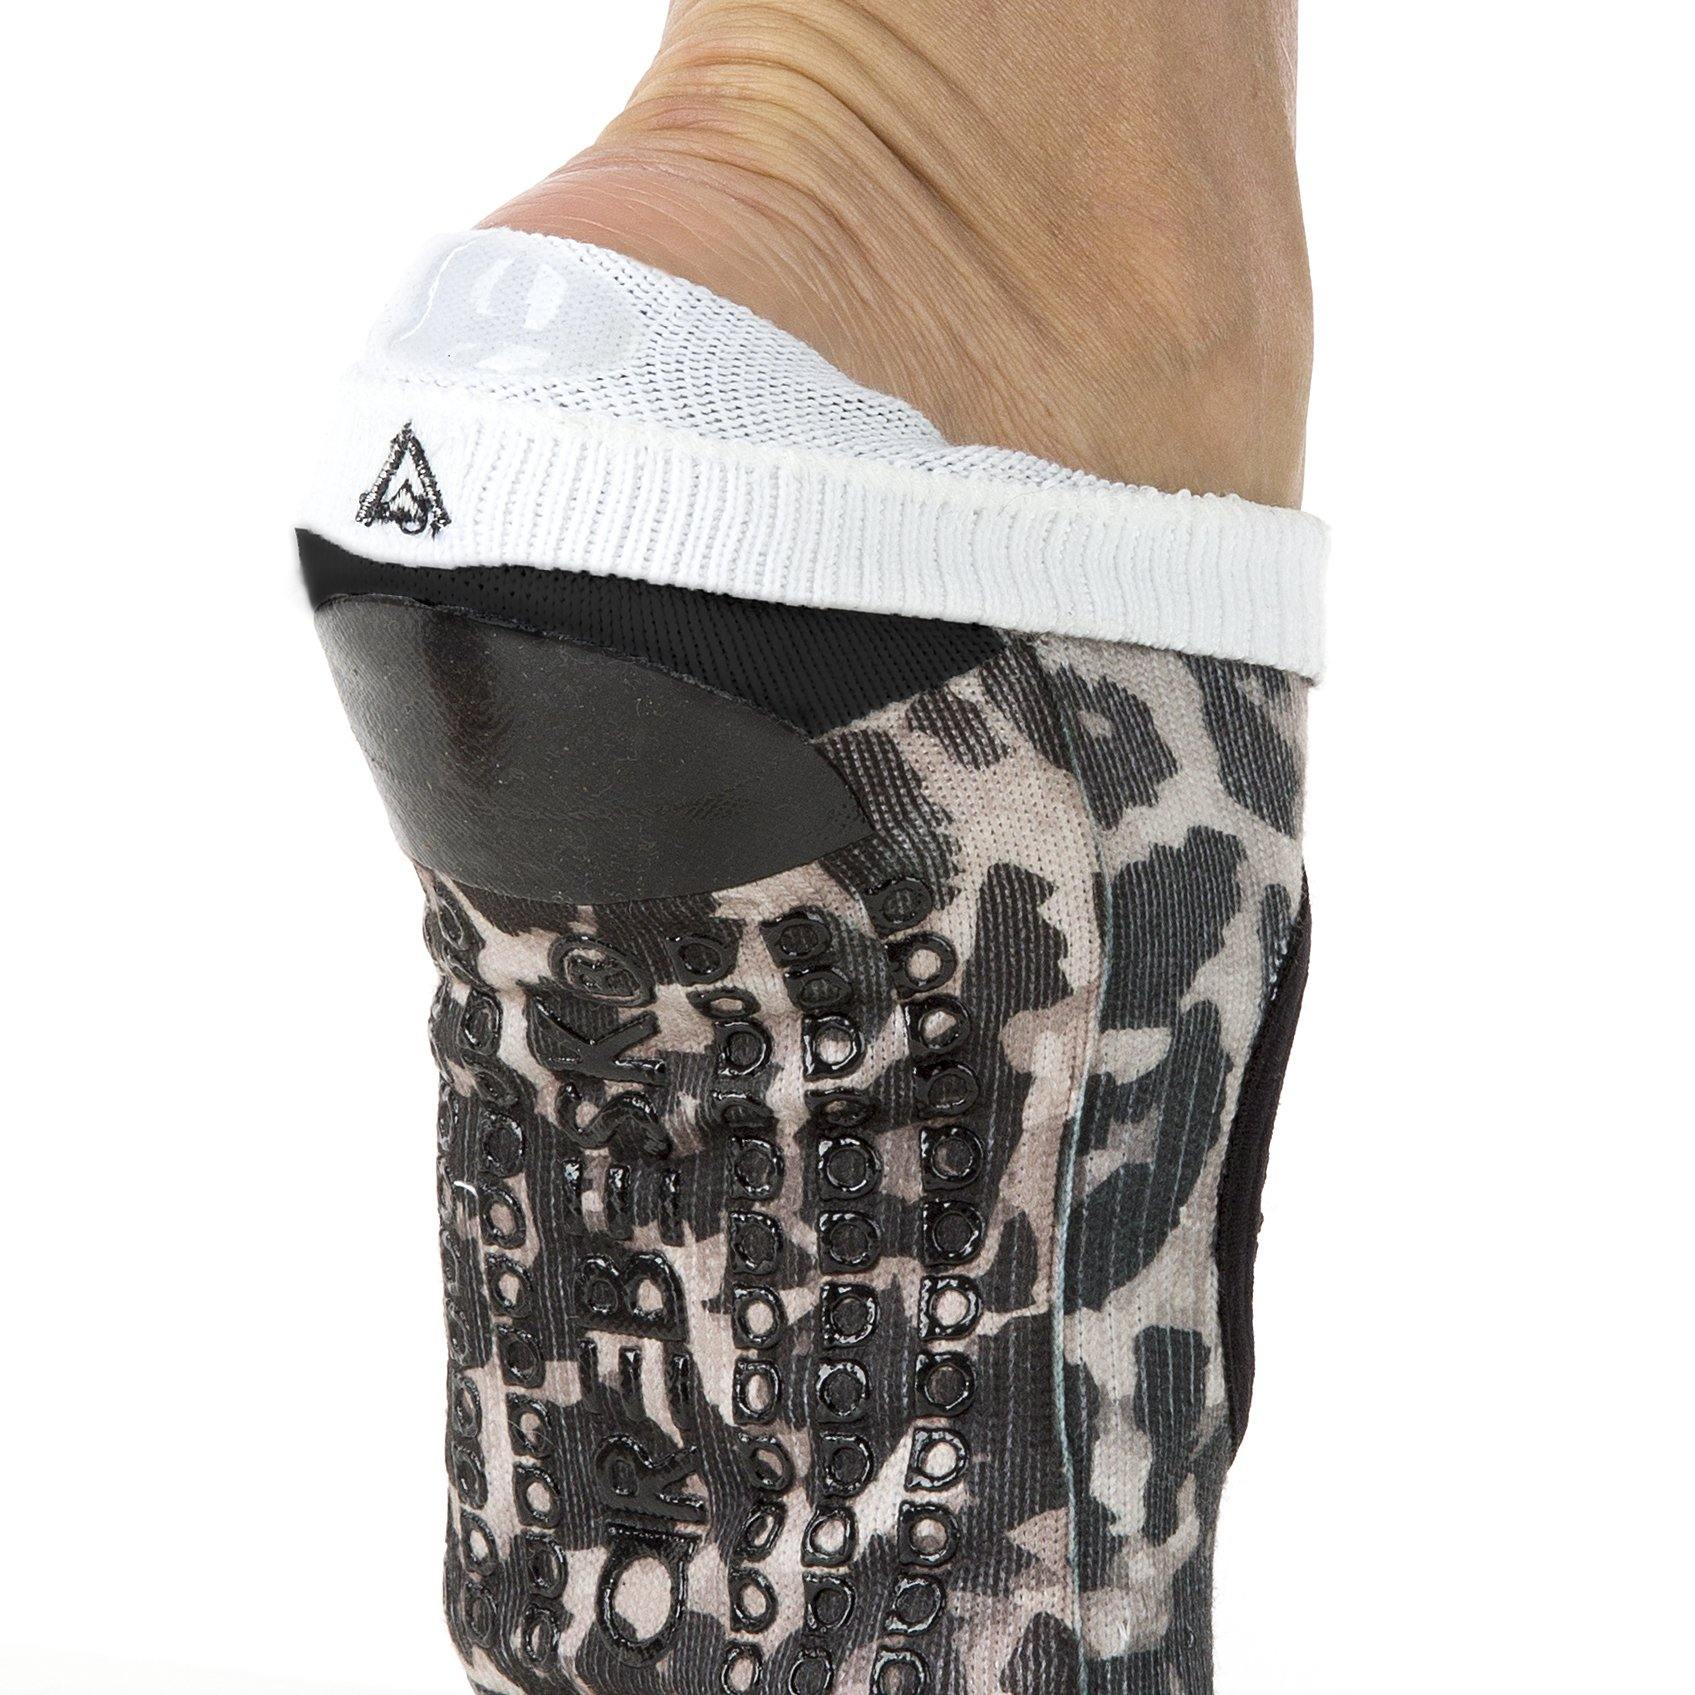 Leopard Print Reformer Mat and Grip Socks